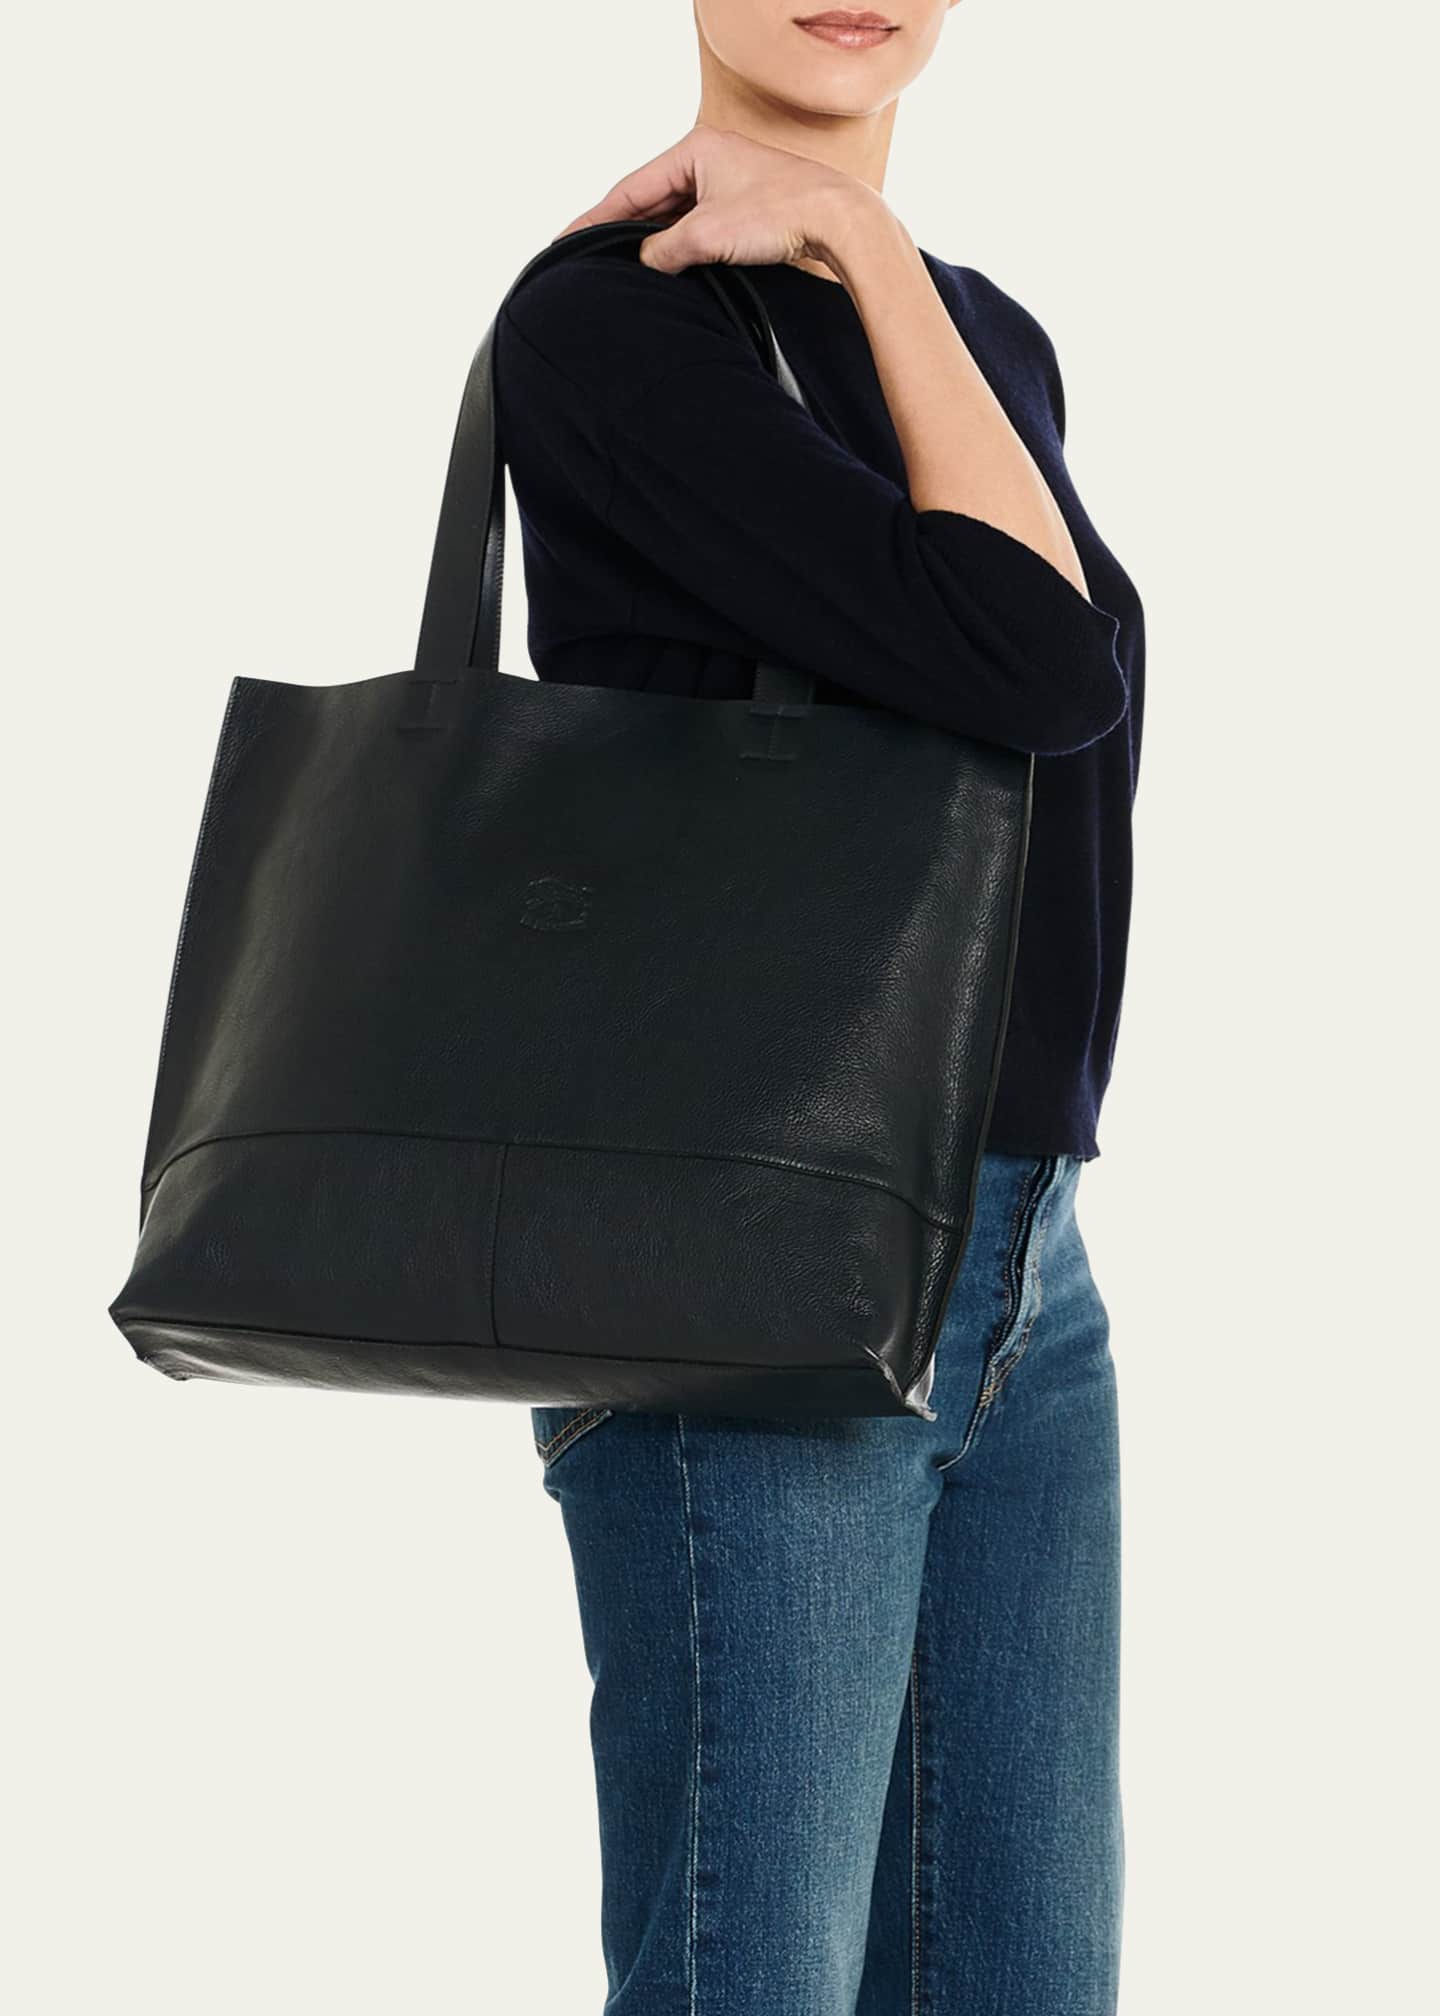 Valentina | Women's Tote Bag in Leather Color Black